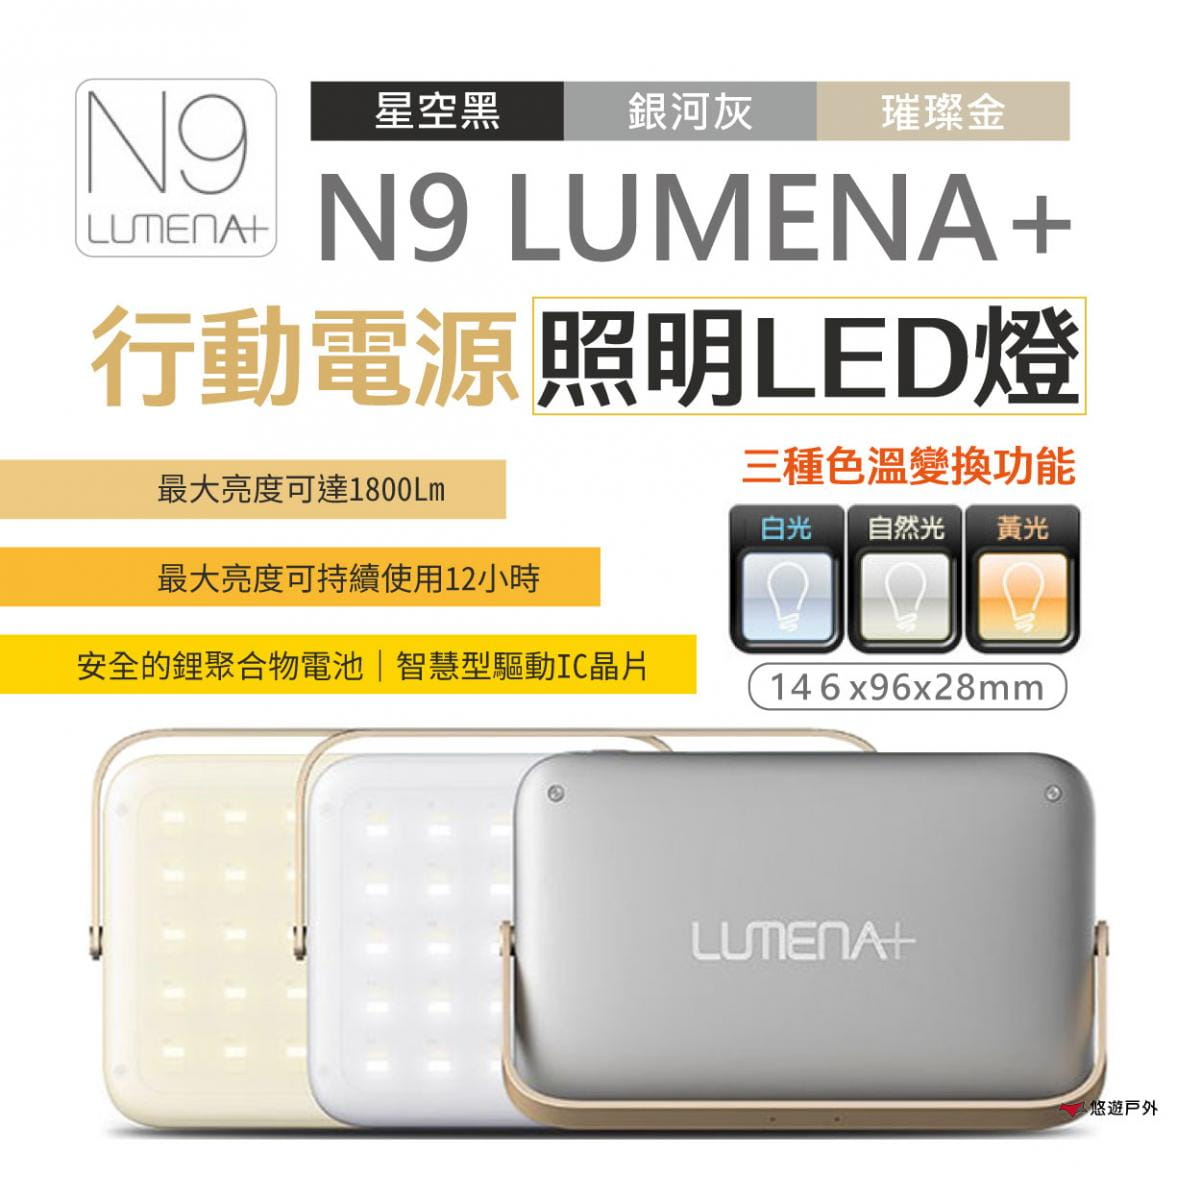 【N9 LUMENA+】行動電源照明LED燈 大N9 (悠遊˙戶外) 0